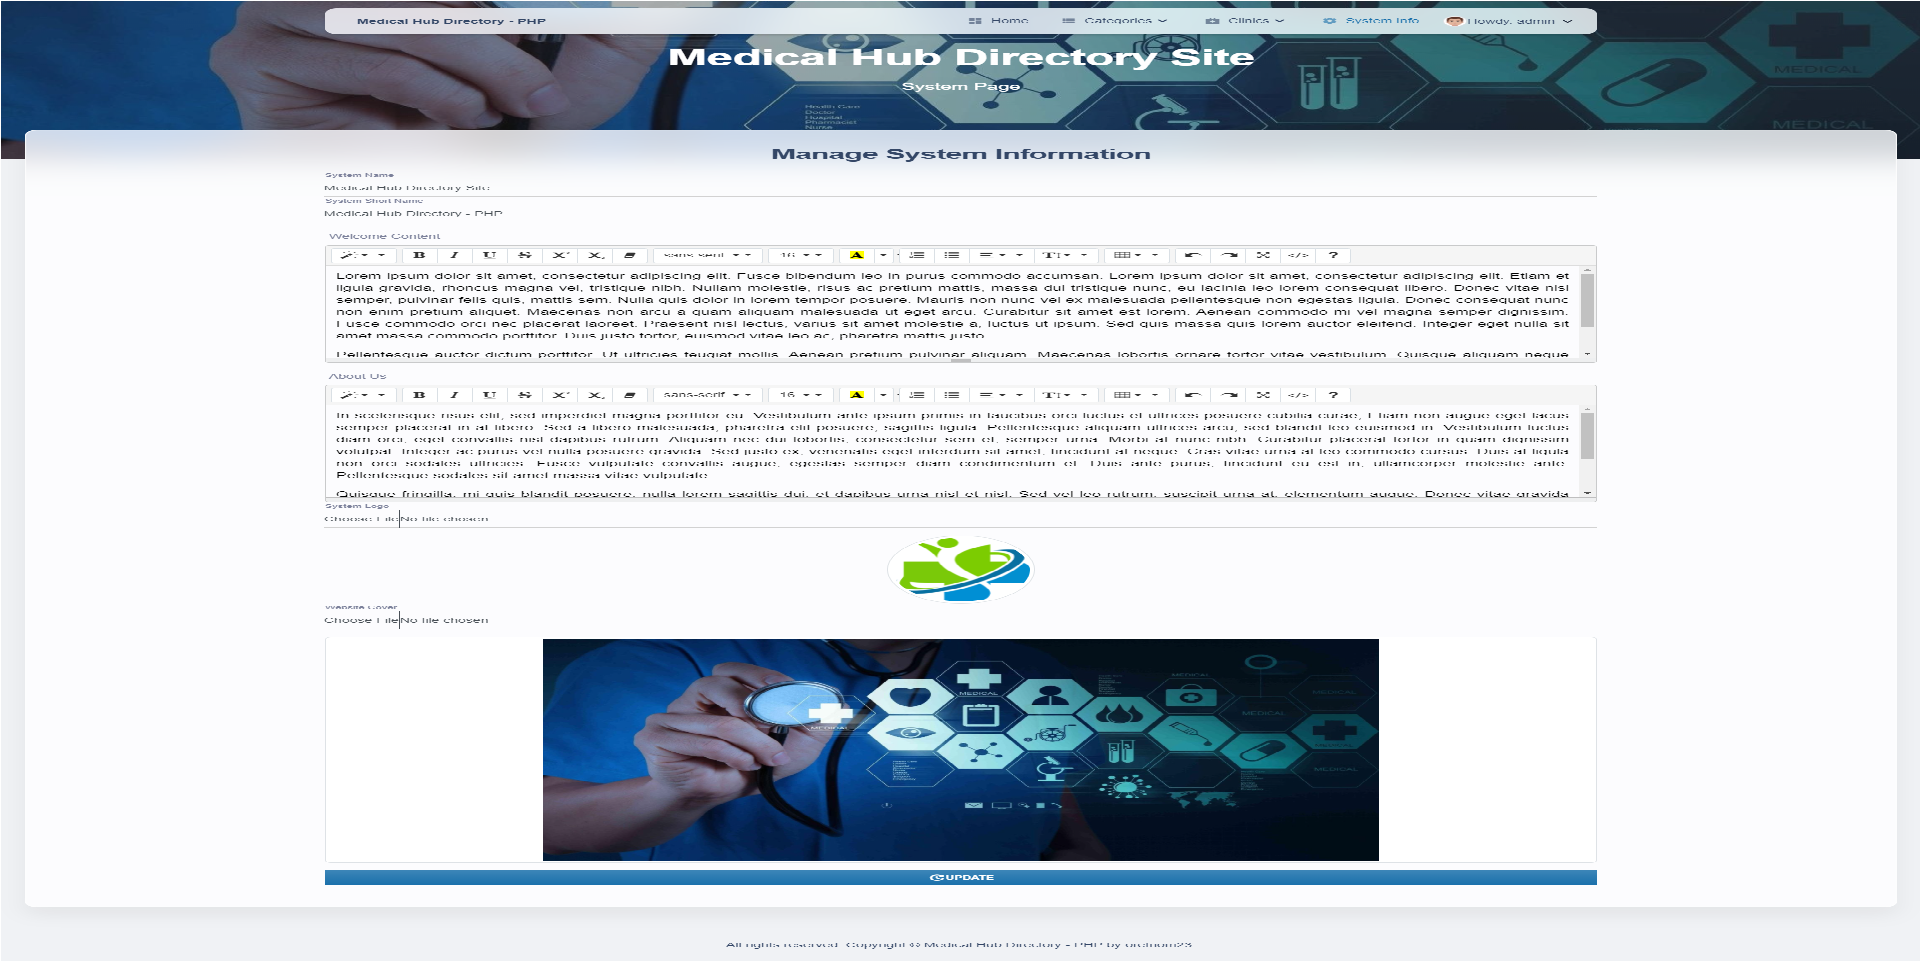 Medical Hub Directory Site